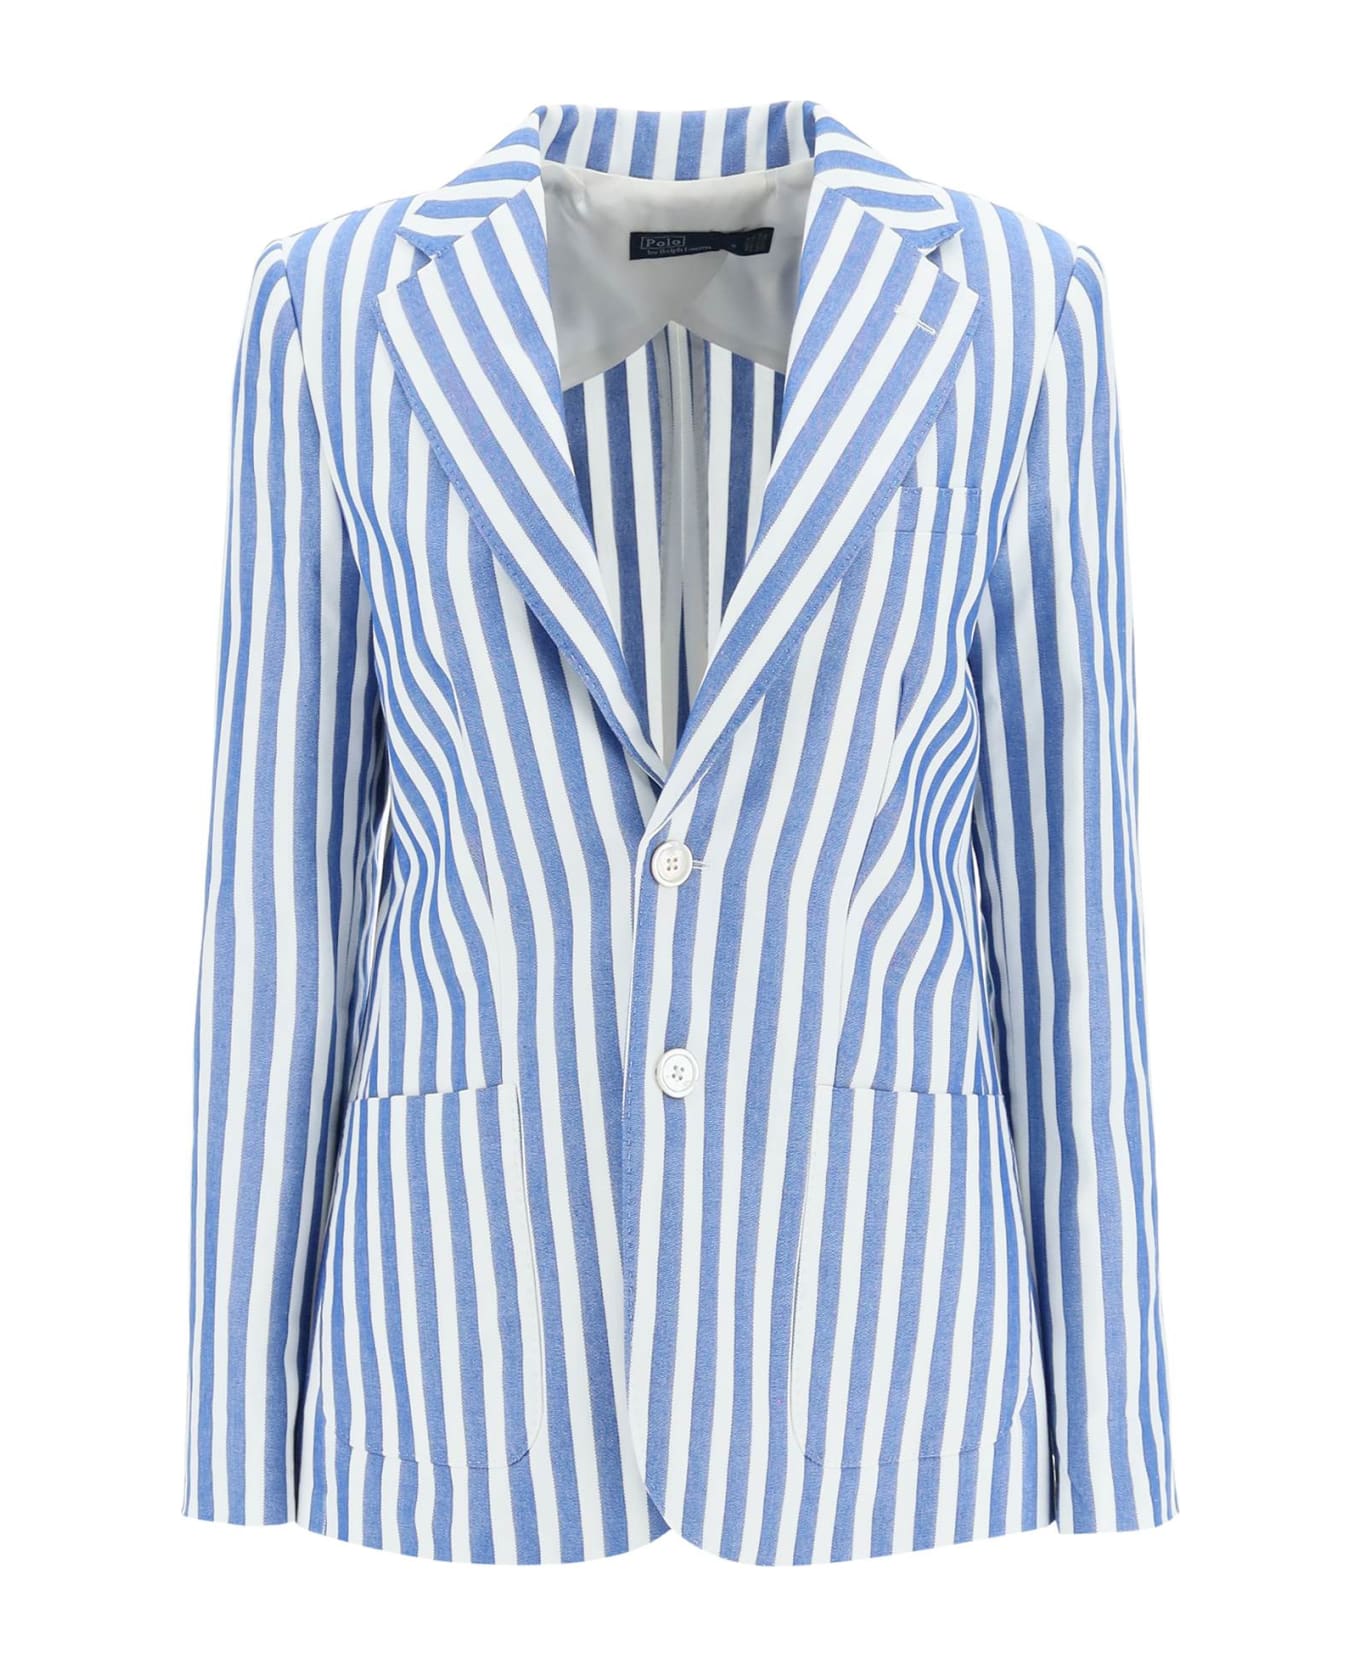 Polo Ralph Lauren Striped Blazer - BLUE WHITE AWNING STRIPE (White)